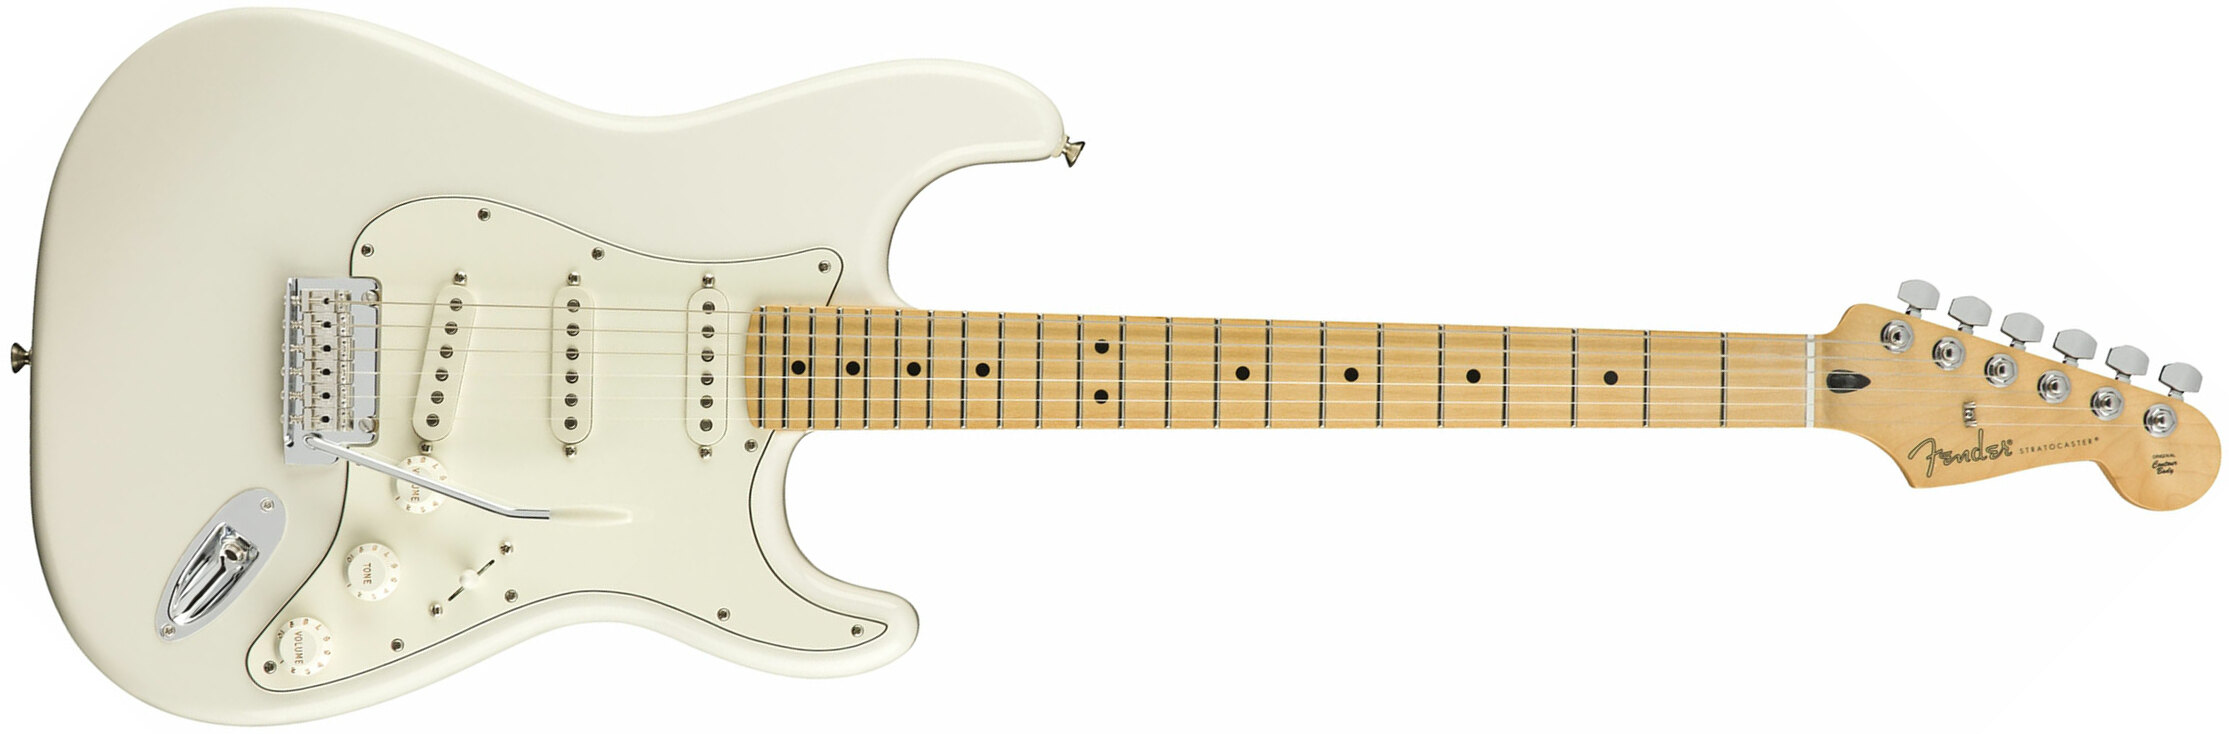 Fender Strat Player Mex Sss Mn - Polar White - Str shape electric guitar - Main picture